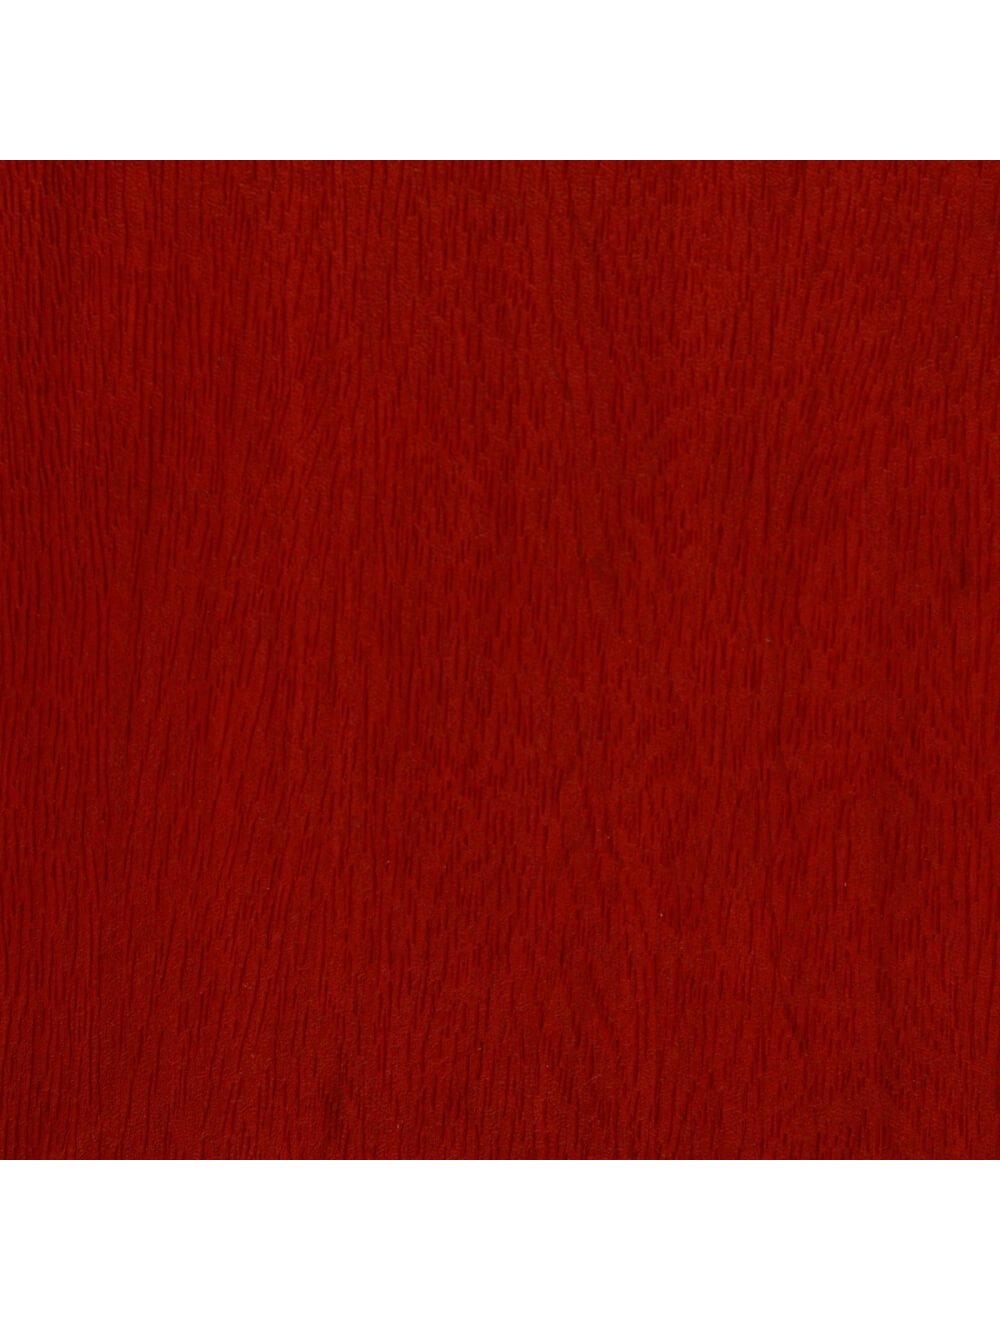 Washington Red Wood Grain Material Swatch (E948)